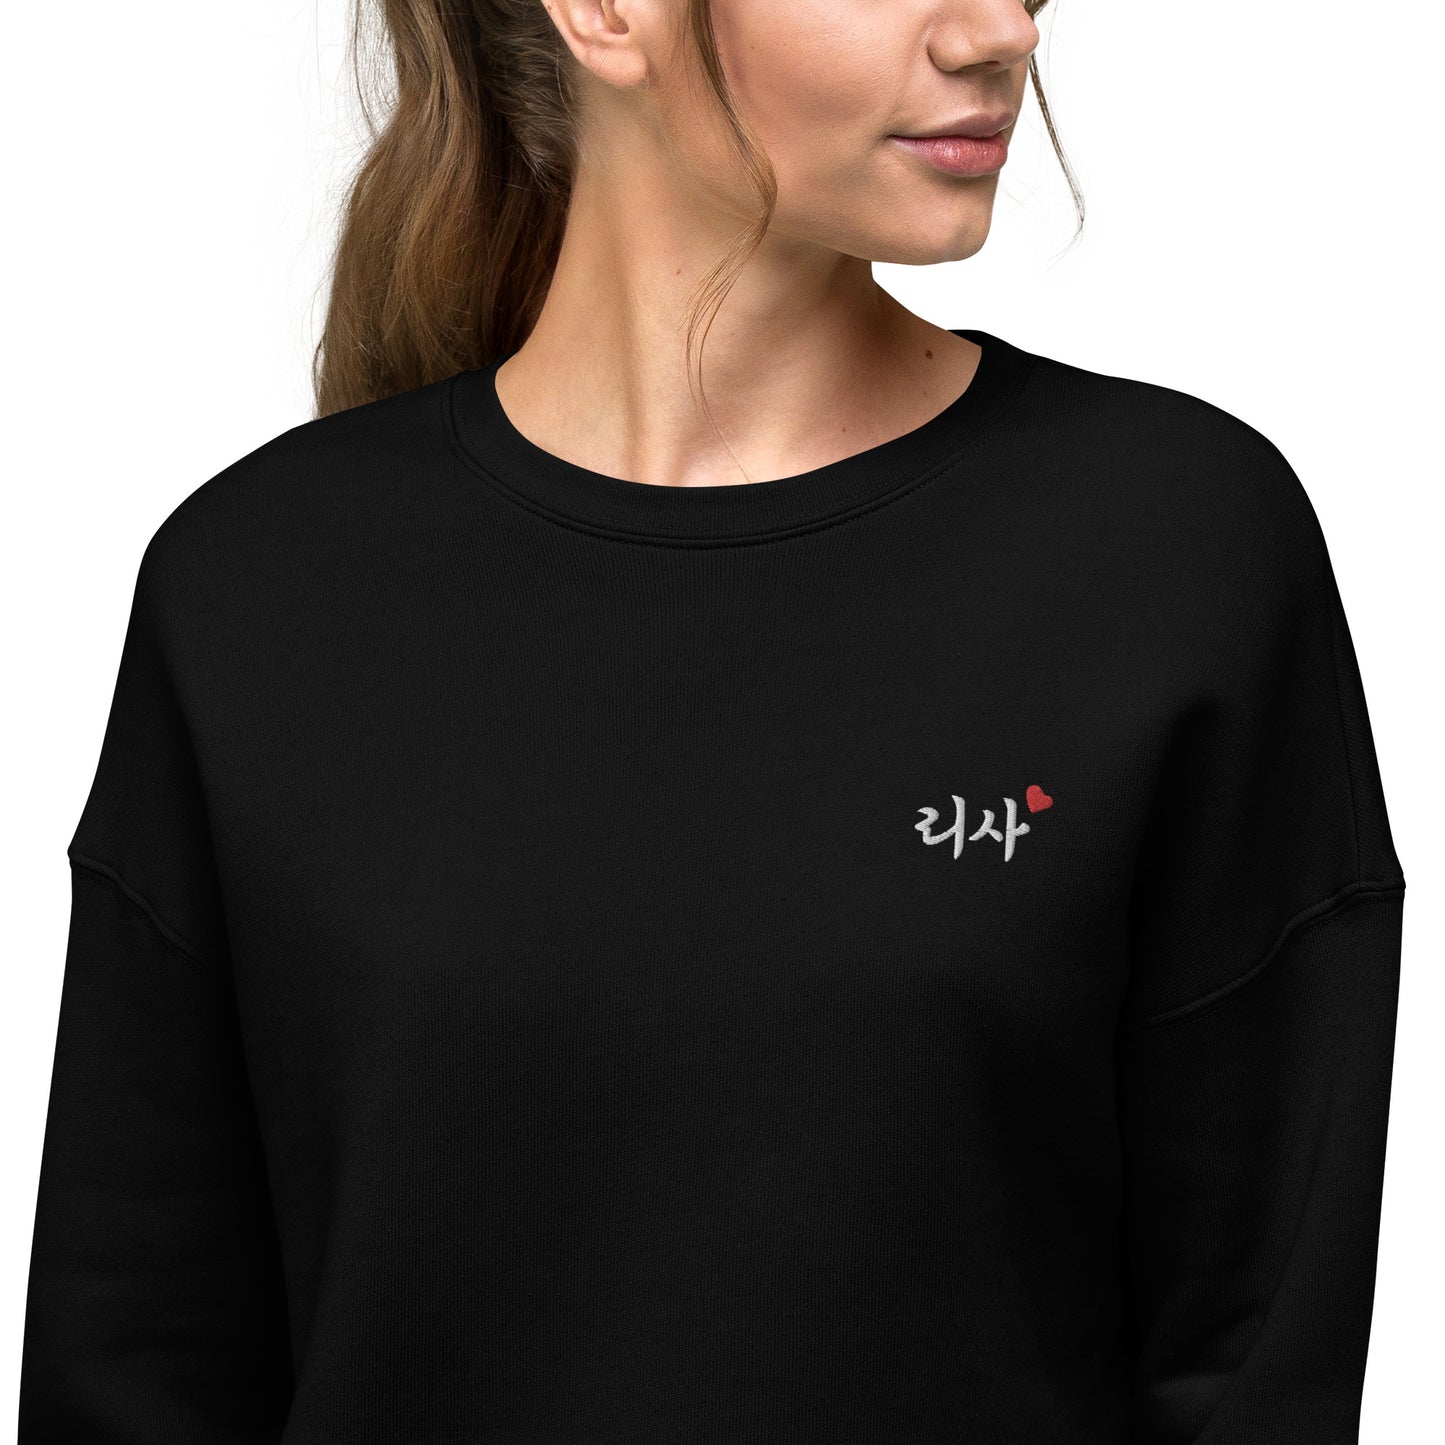 Lisa Korean Name Embroidery Women's Cropped Sweatshirt